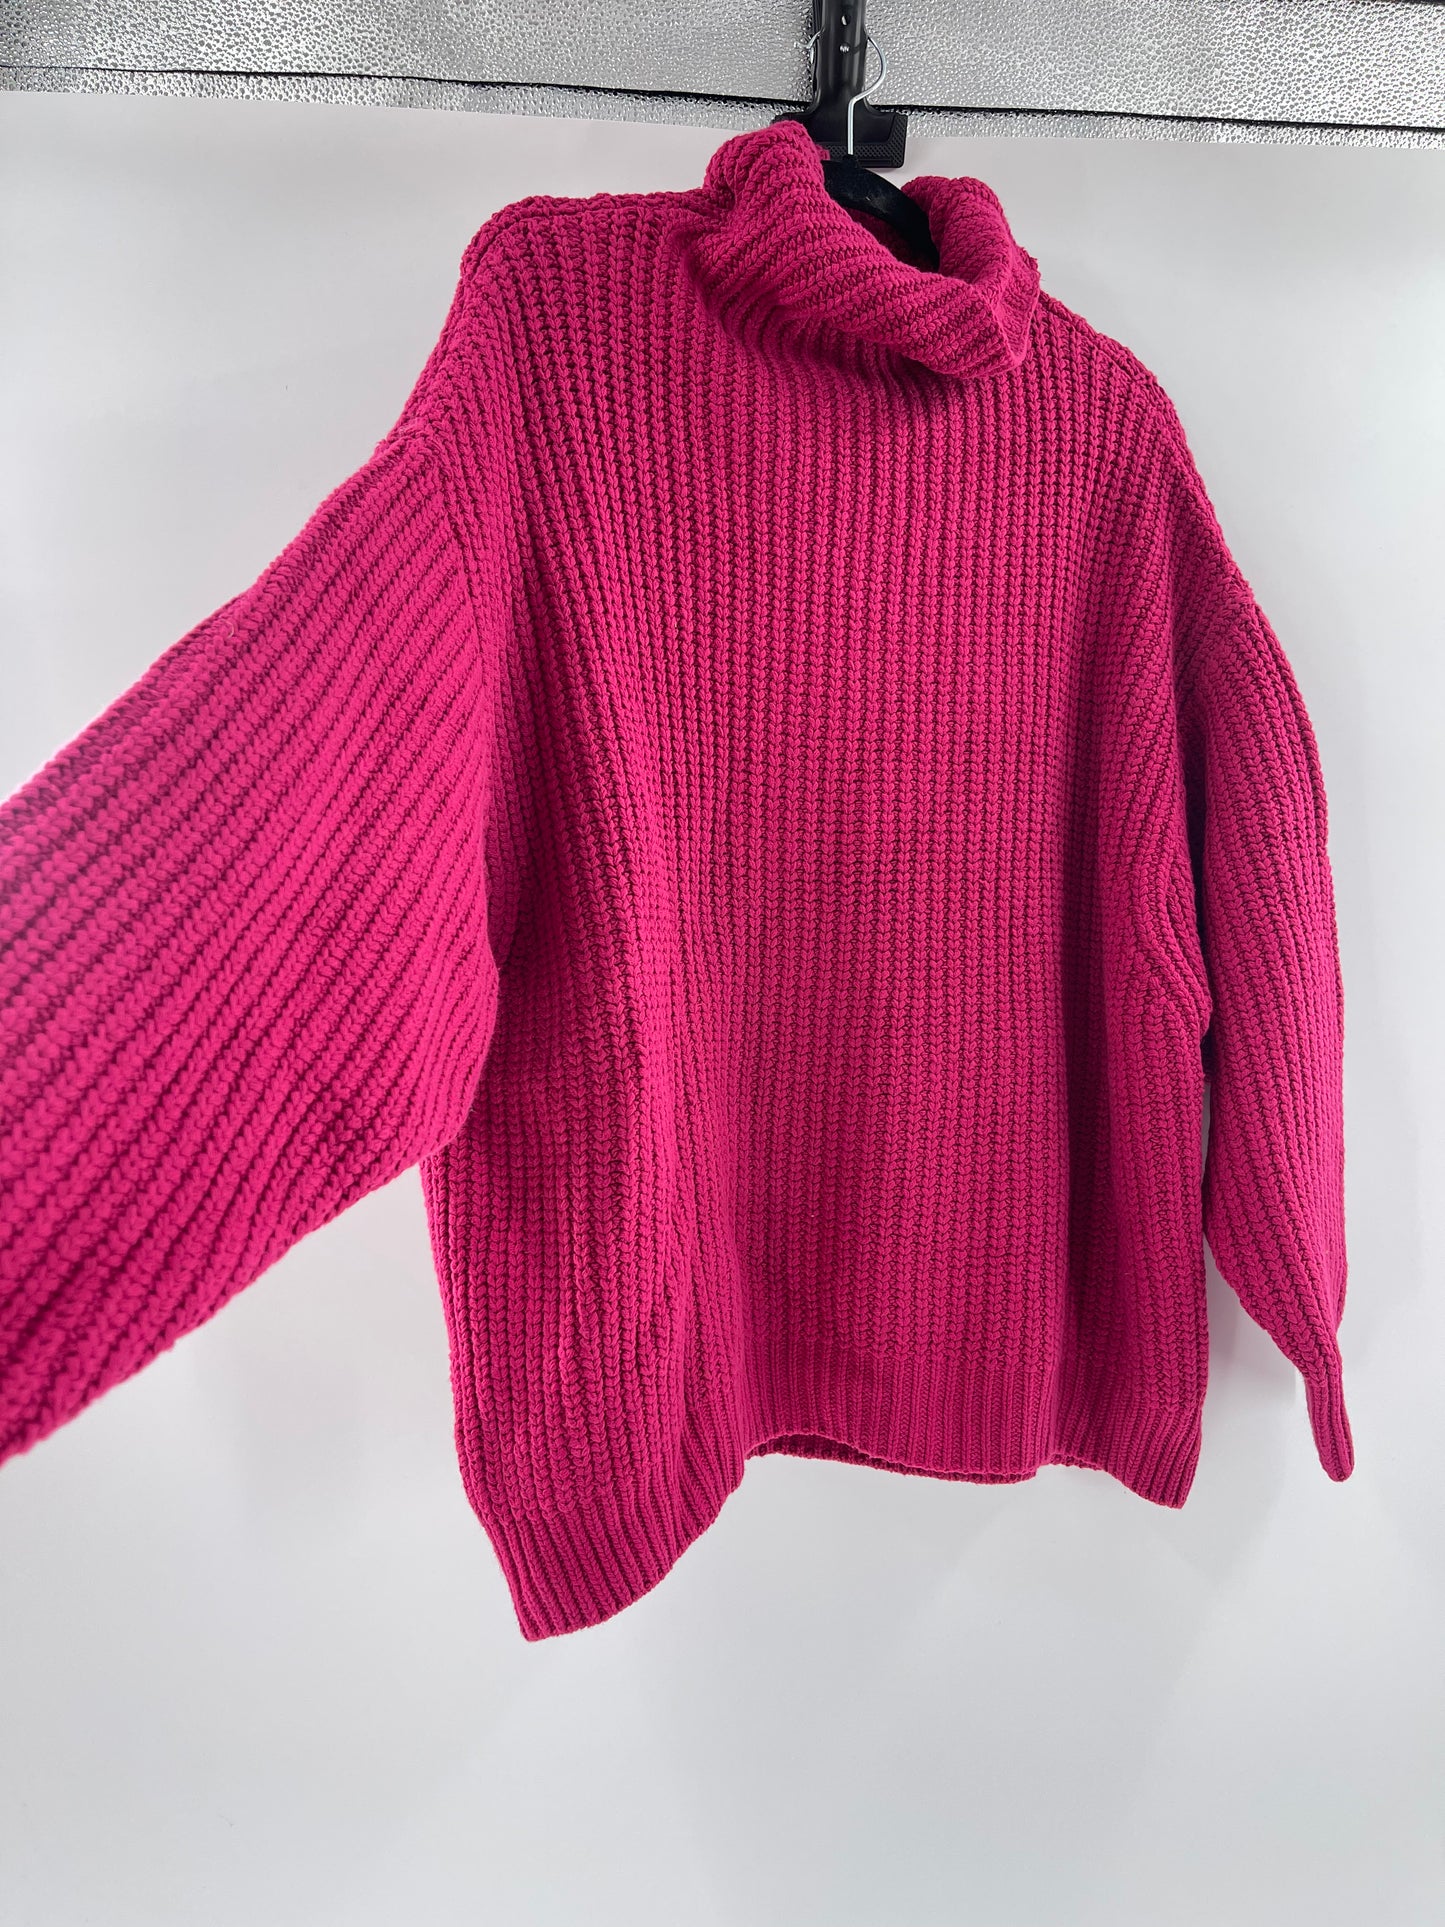 Fuschia Thick Knit Sweater (S)